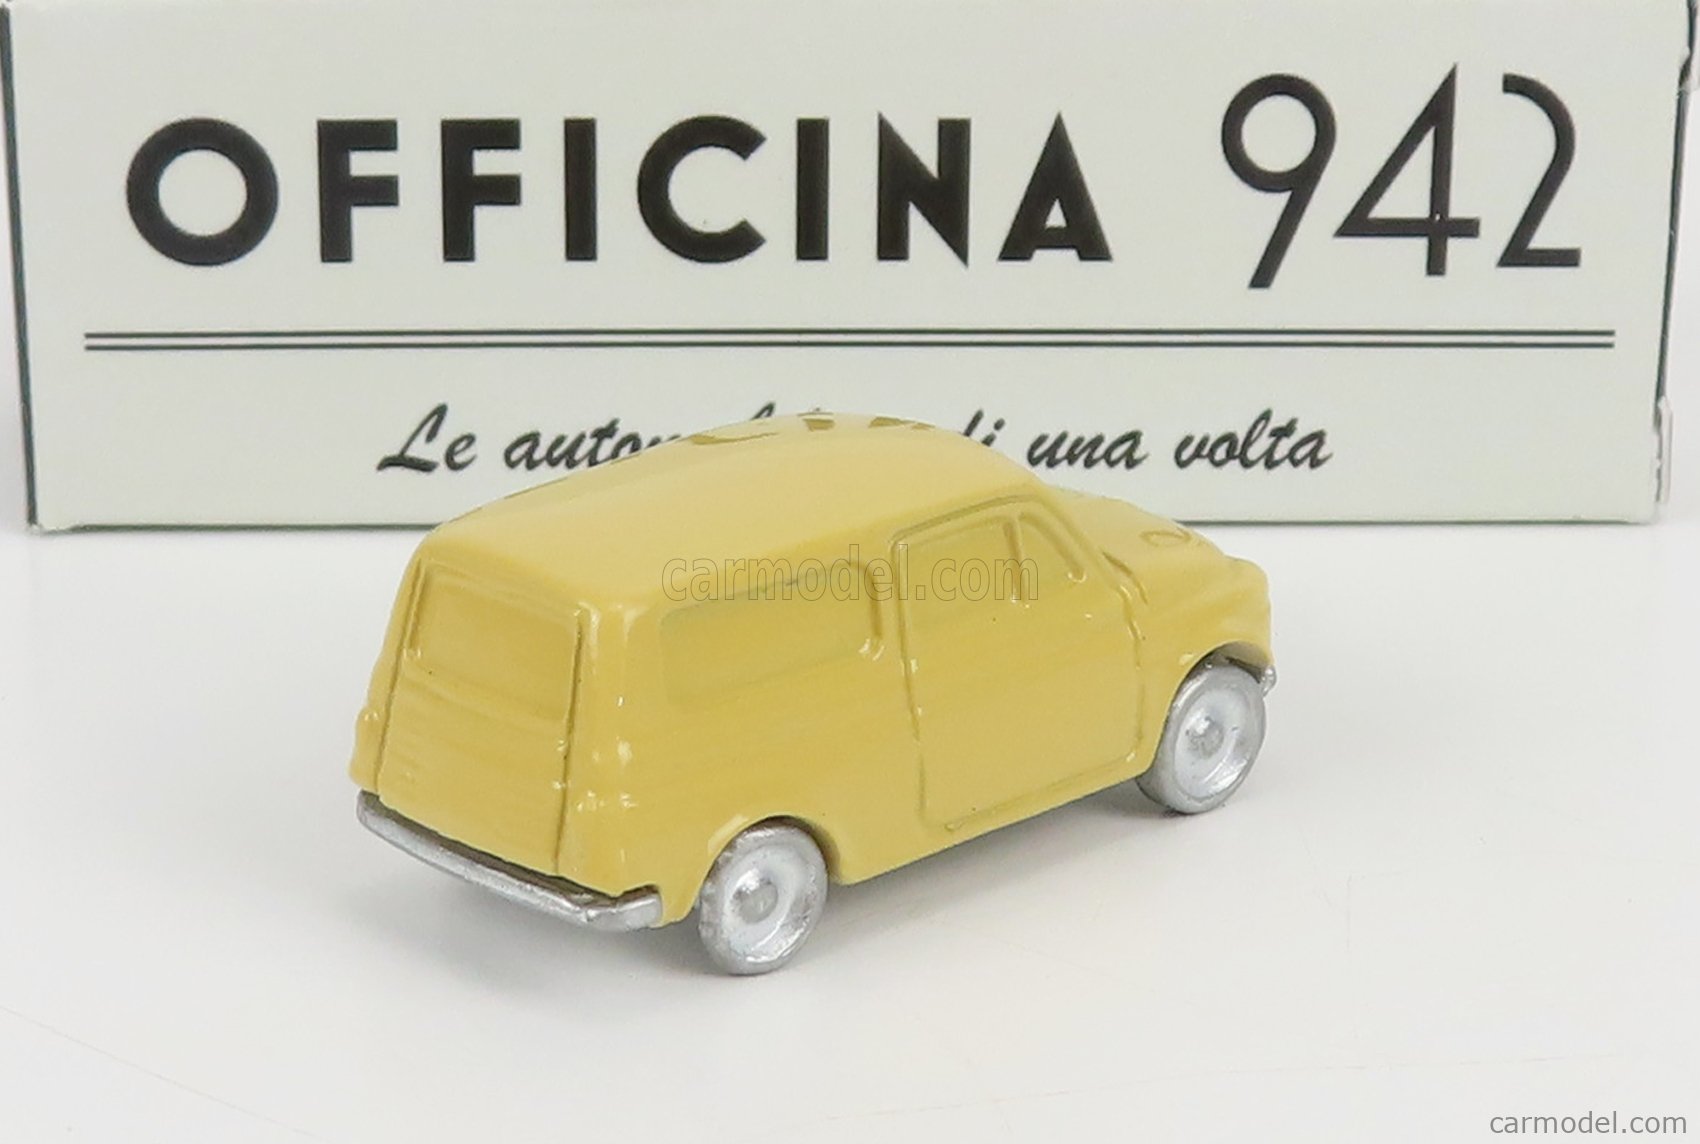 OFFICINA-942 ART2031A Scala 1/76  FIAT 500 UTILITY FRANCIS LOMBARDI 1959 BEIGE